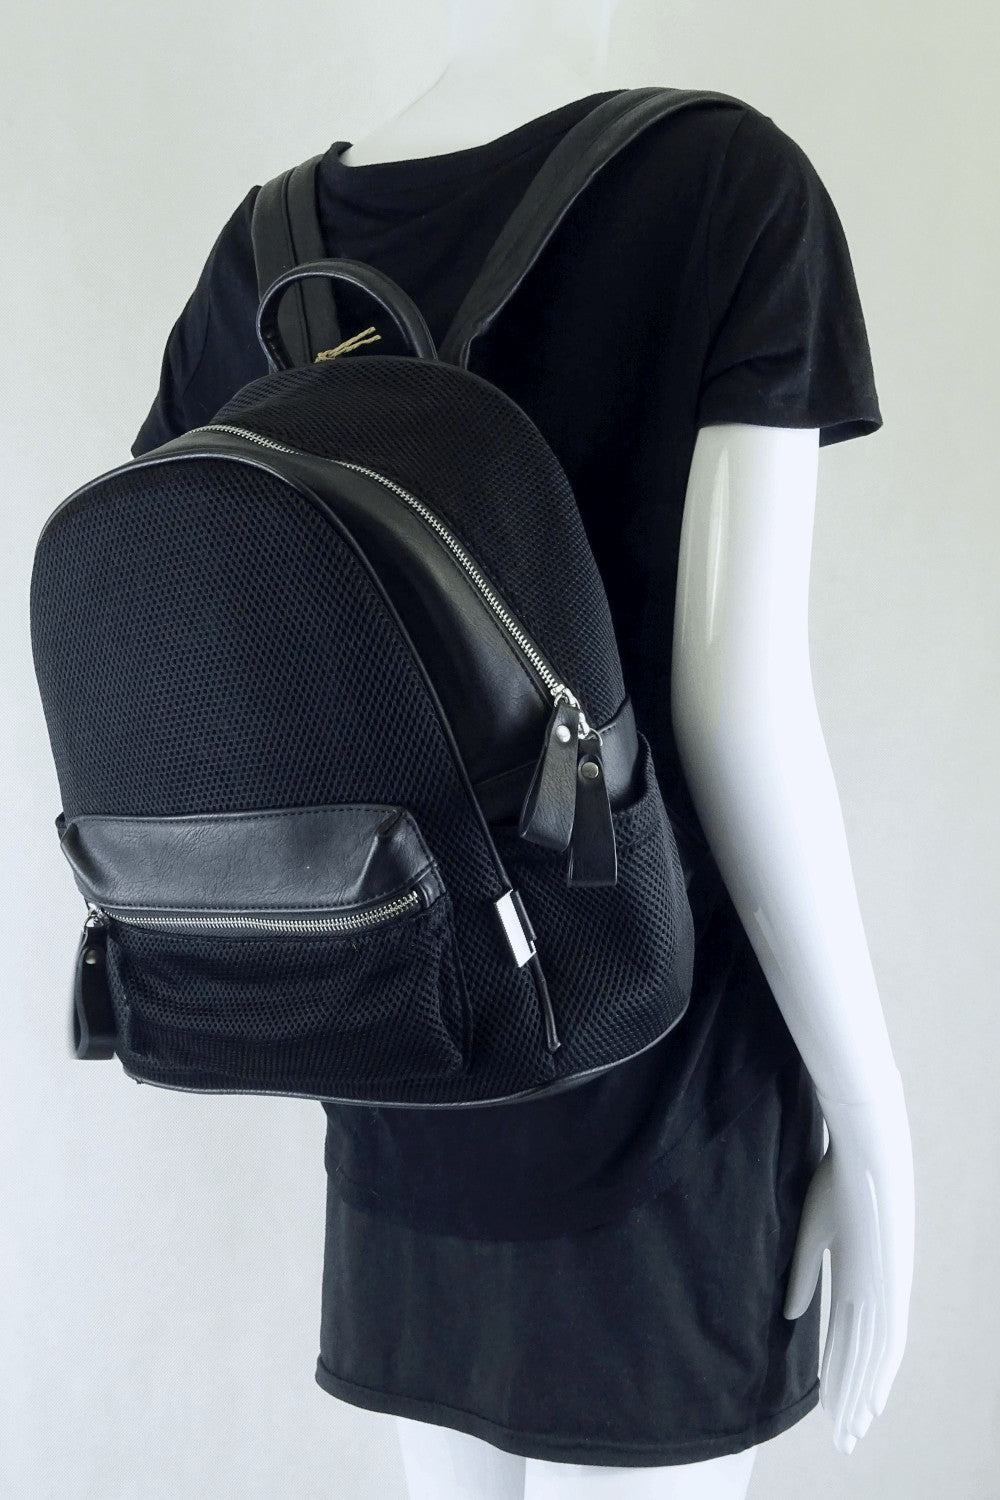 Black Mesh Backpack